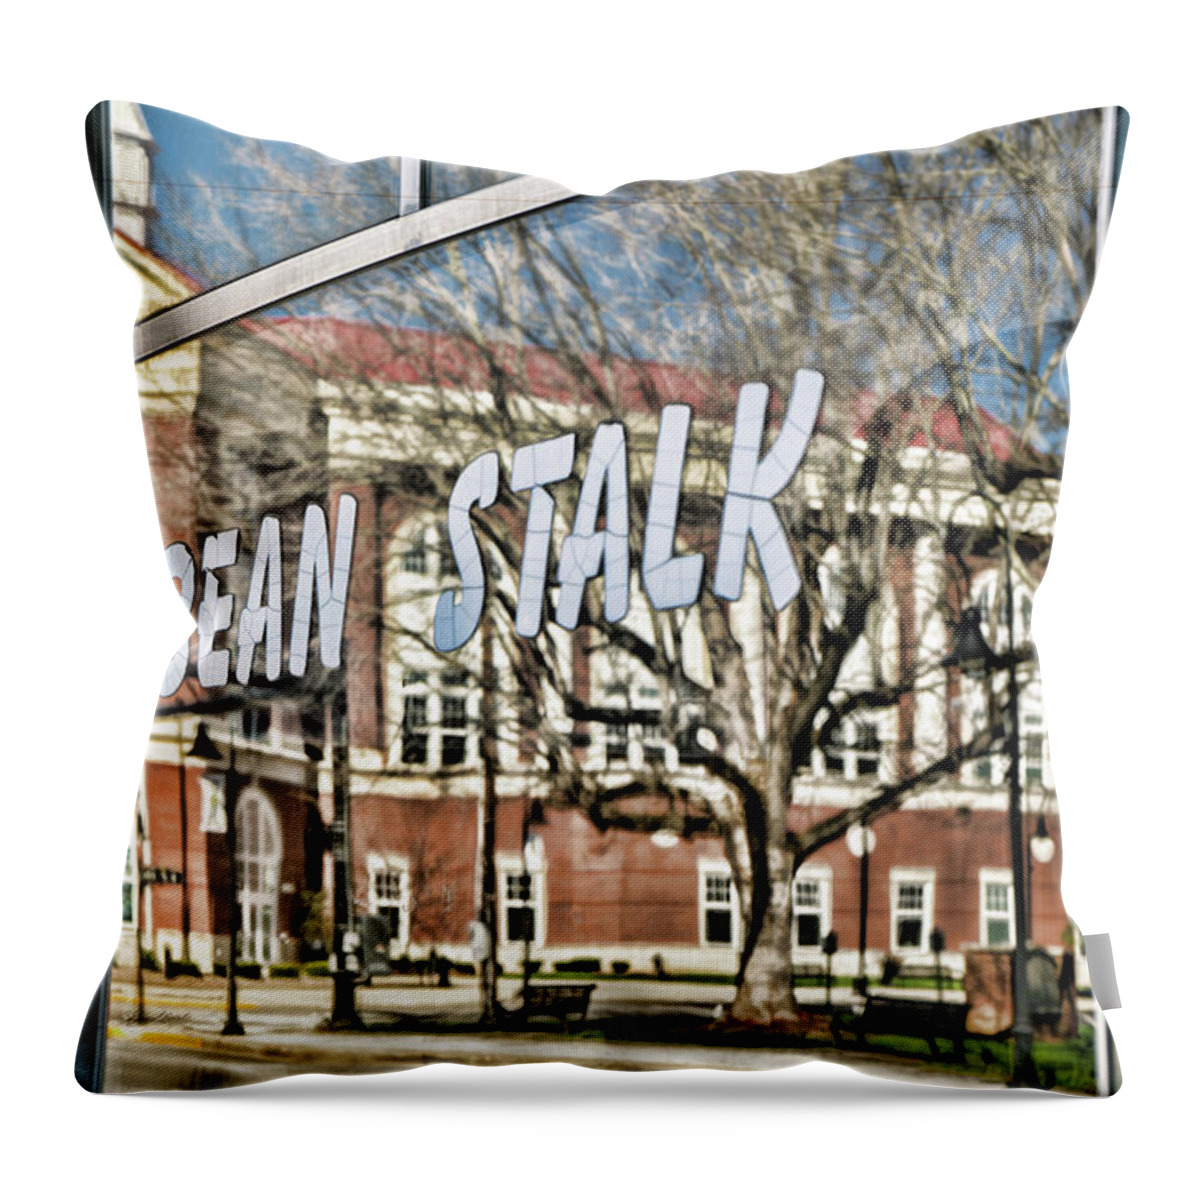 Sharon Popek Throw Pillow featuring the photograph Bean Stalk Reflection by Sharon Popek